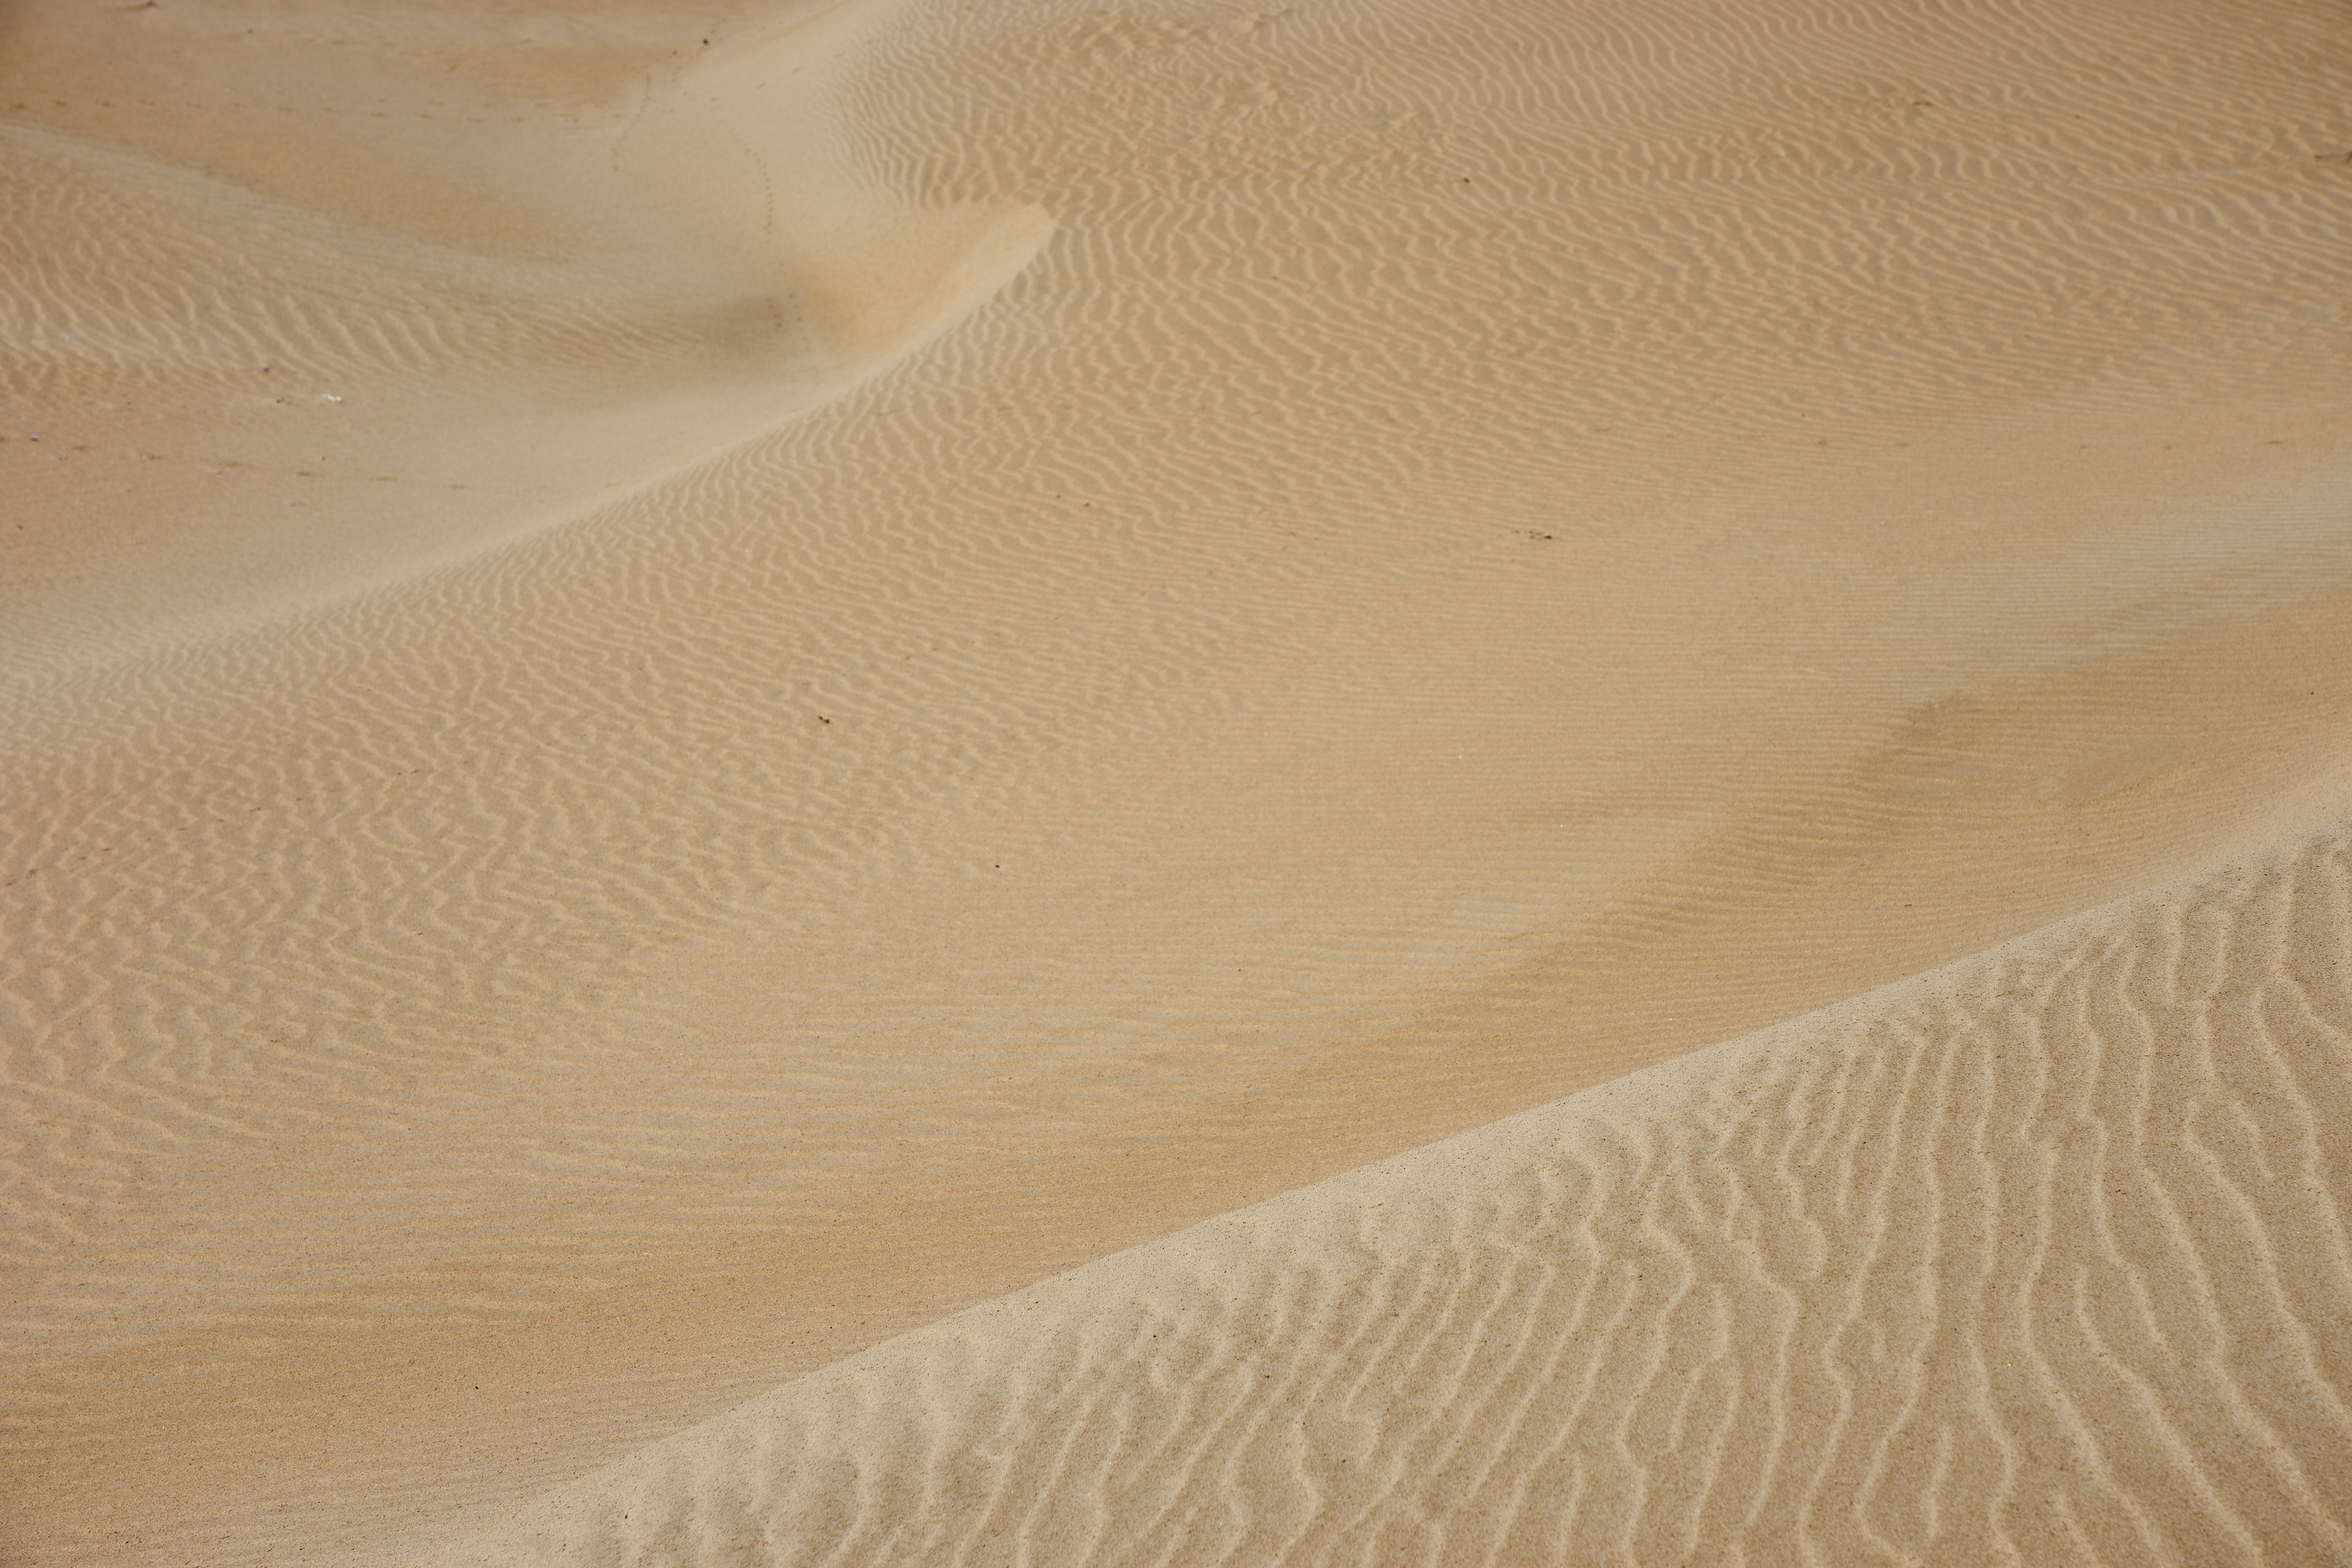 Windows Backgrounds waves, sand, desert, texture, textures, wavy